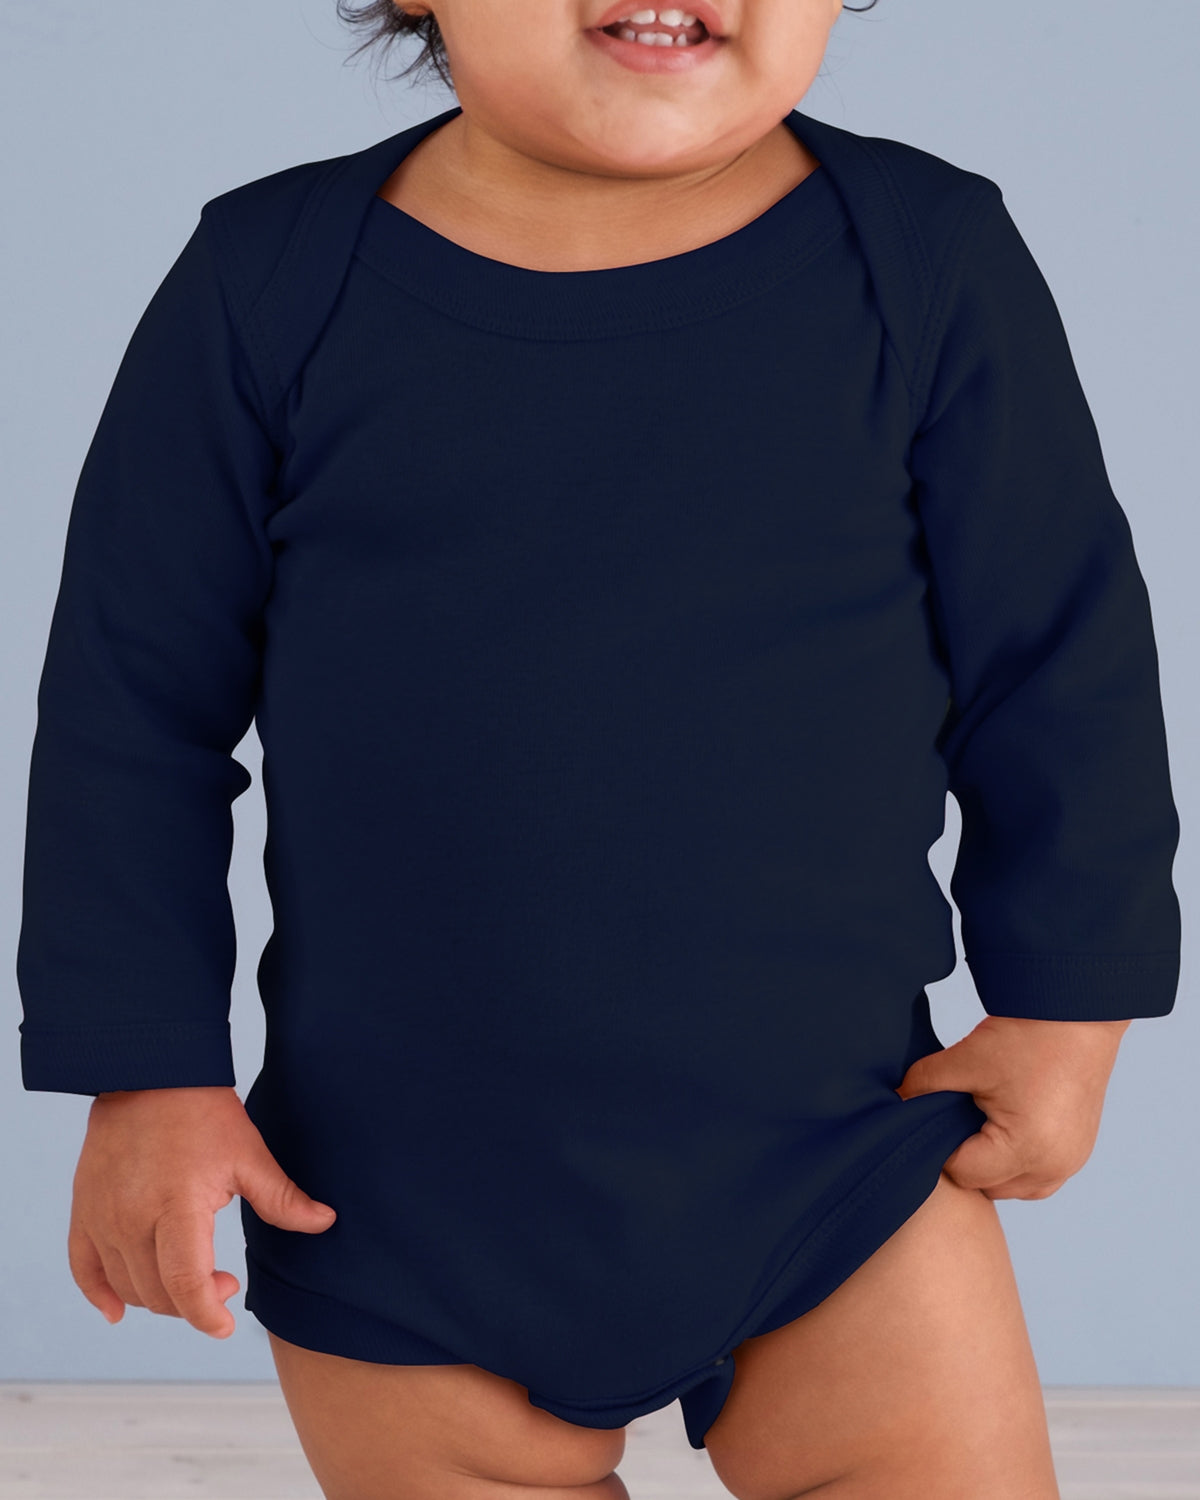 Infant Long-Sleeve Baby Rib Bodysuit